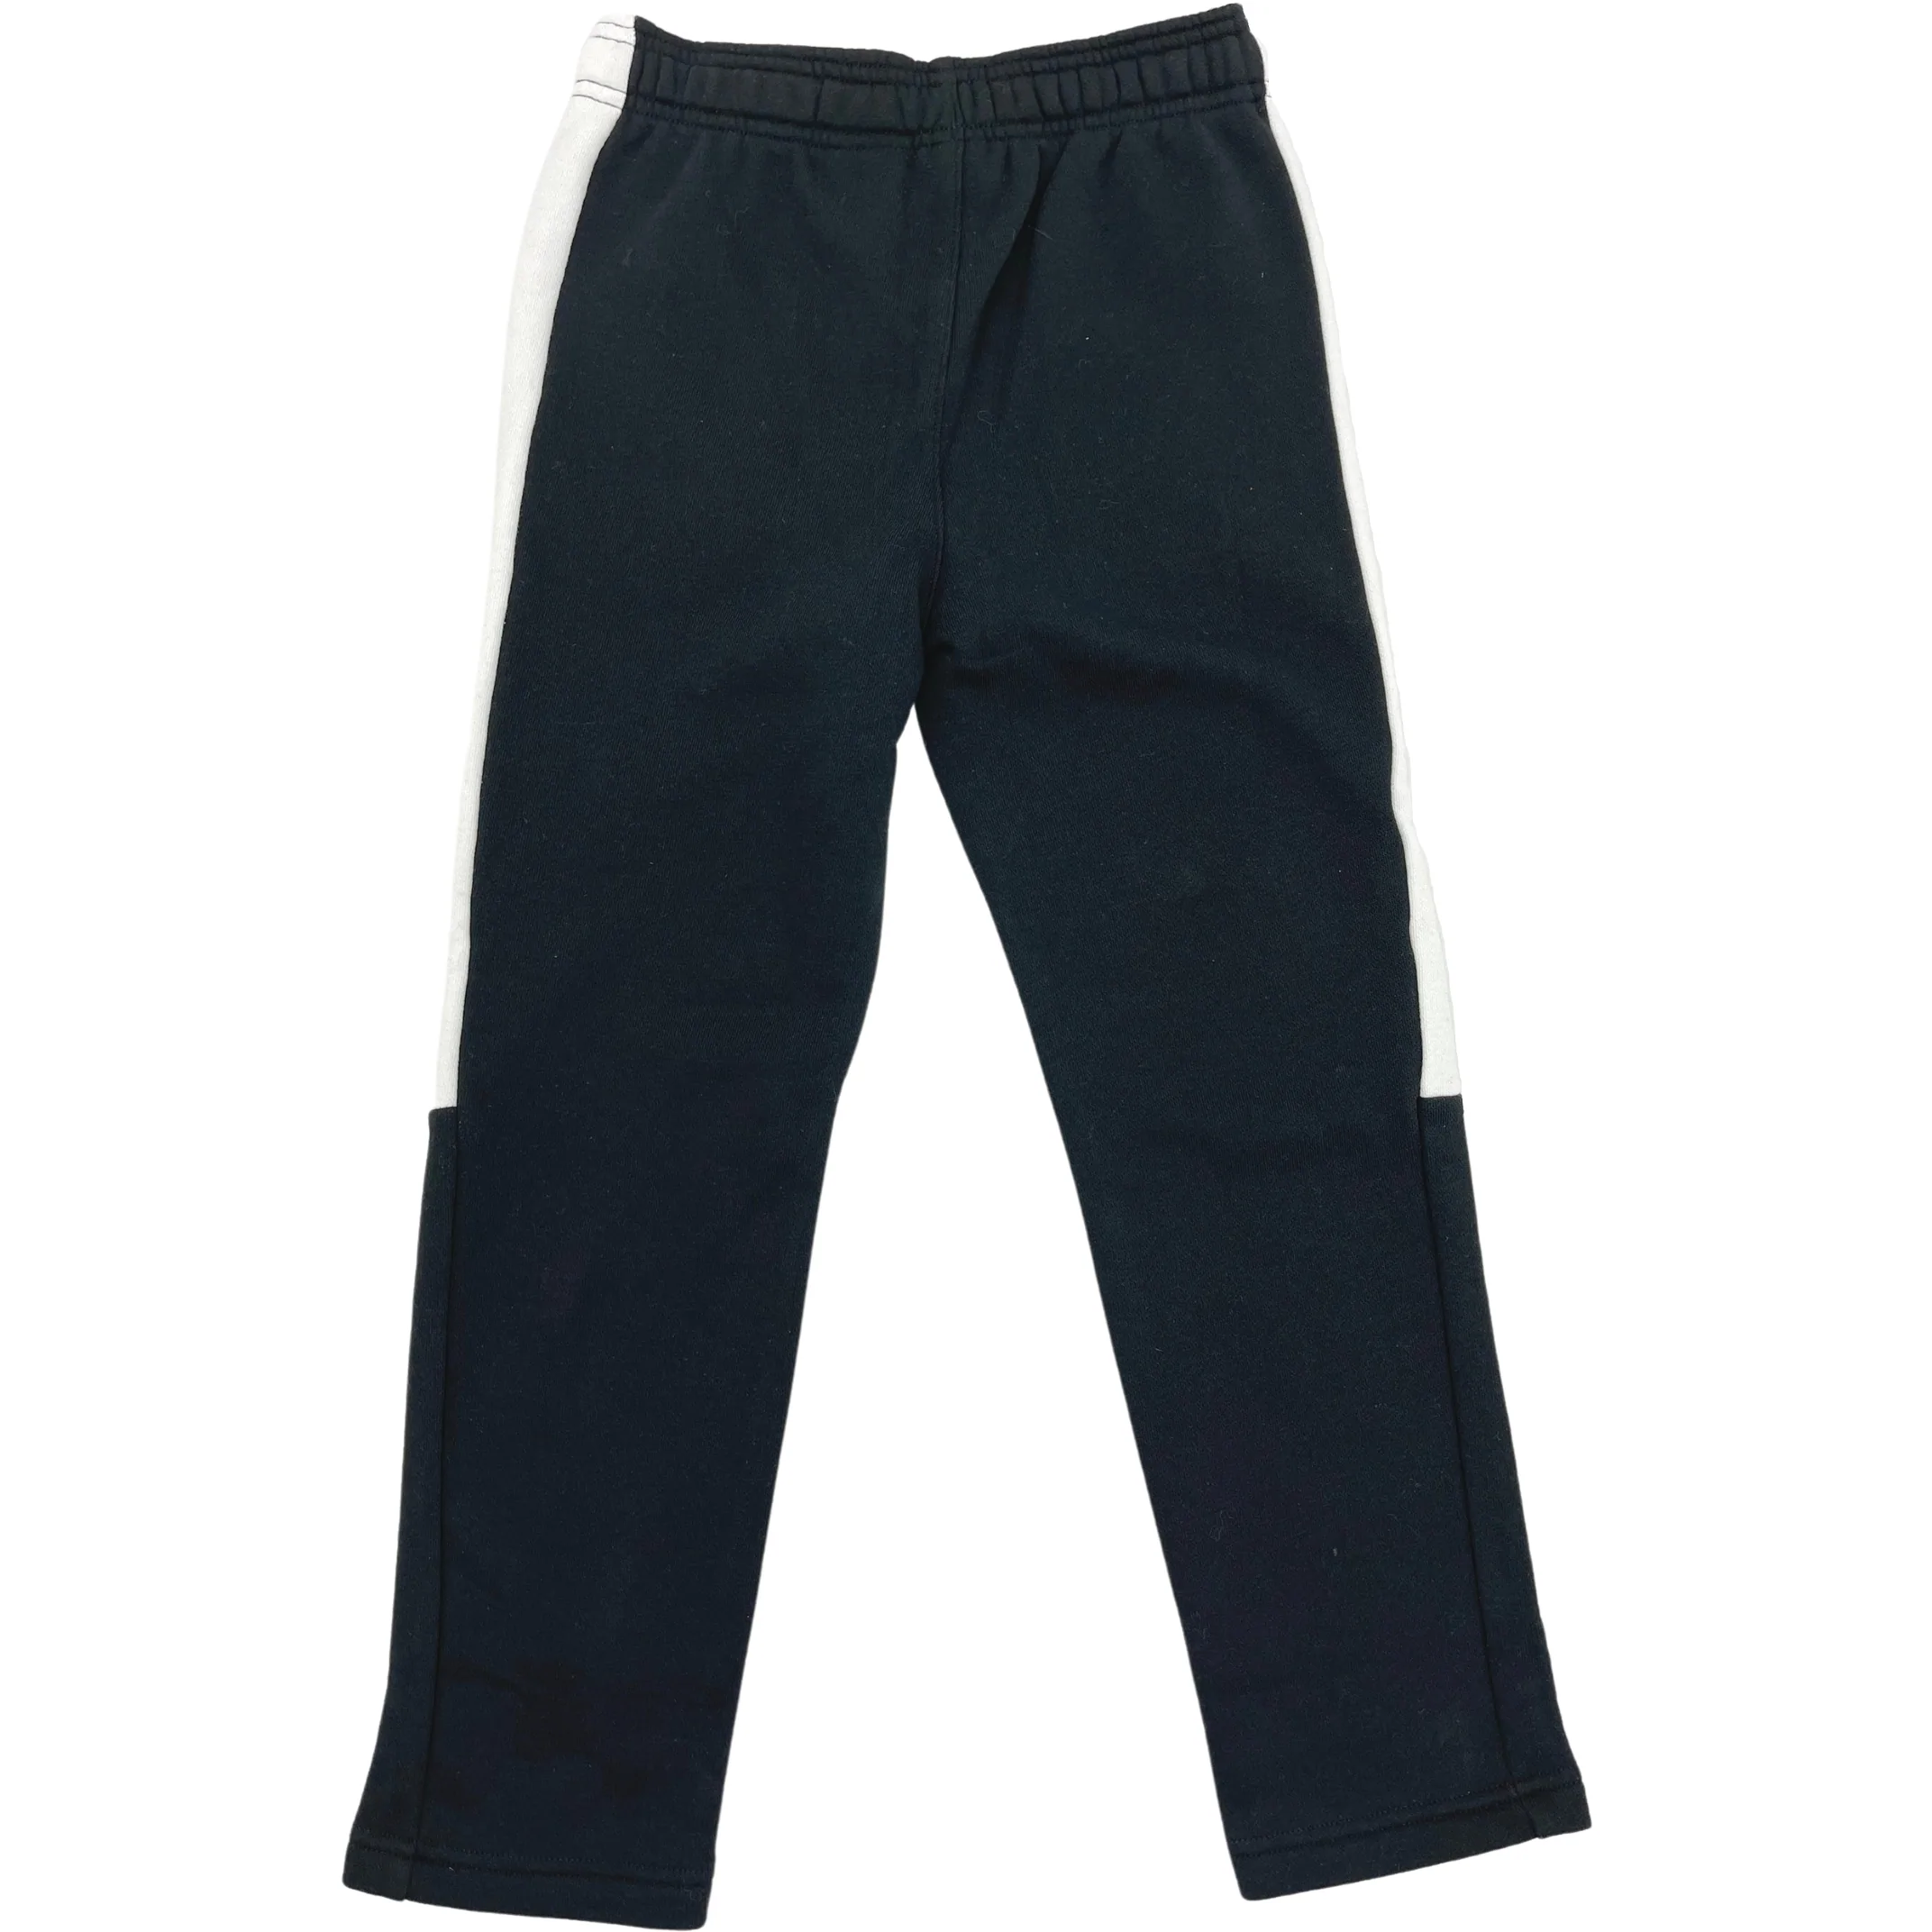 Puma Boy's Sweatpants / Boy's Jogging Pants / Black & White / Size Medium